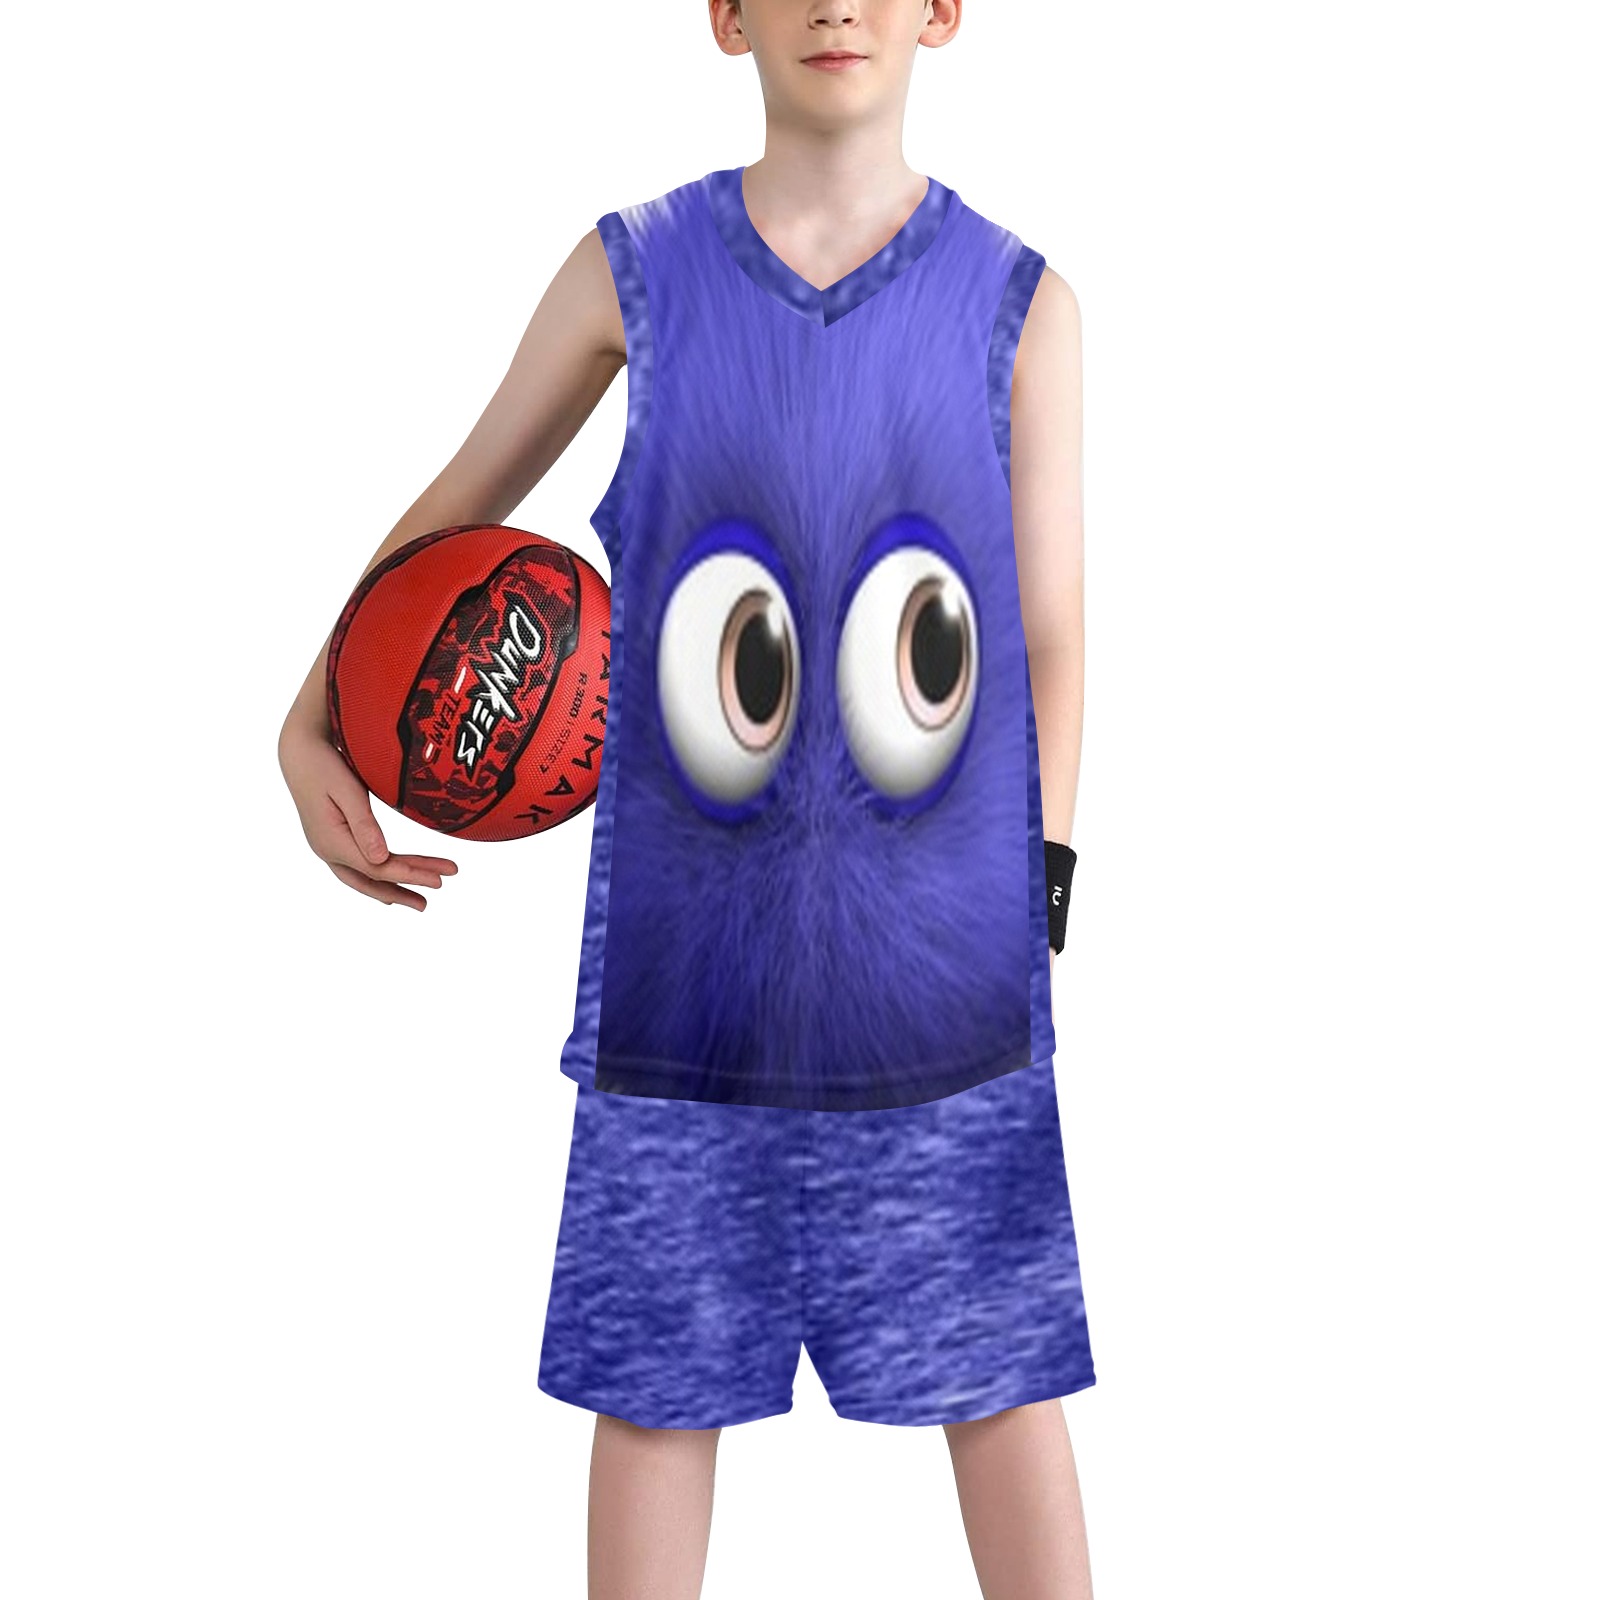 Kiddos GoofBalls Boys' V-Neck Basketball Uniform